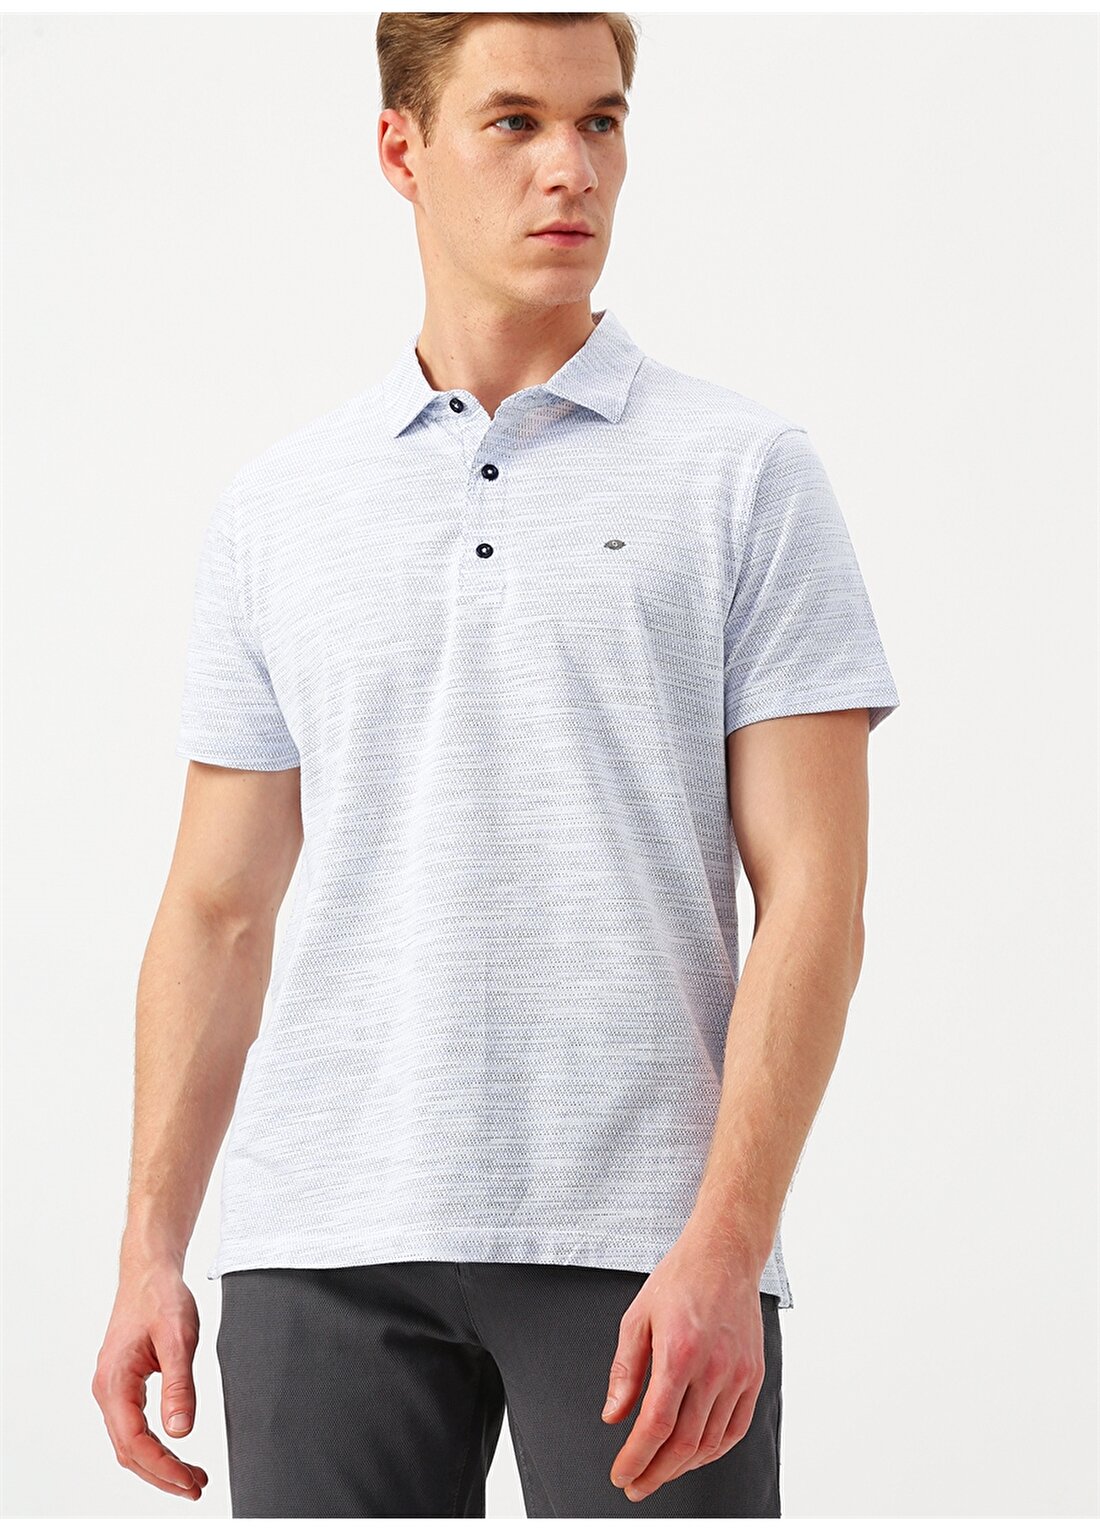 Fabrika Lacivert Beyaz Desenli Polo T-Shirt